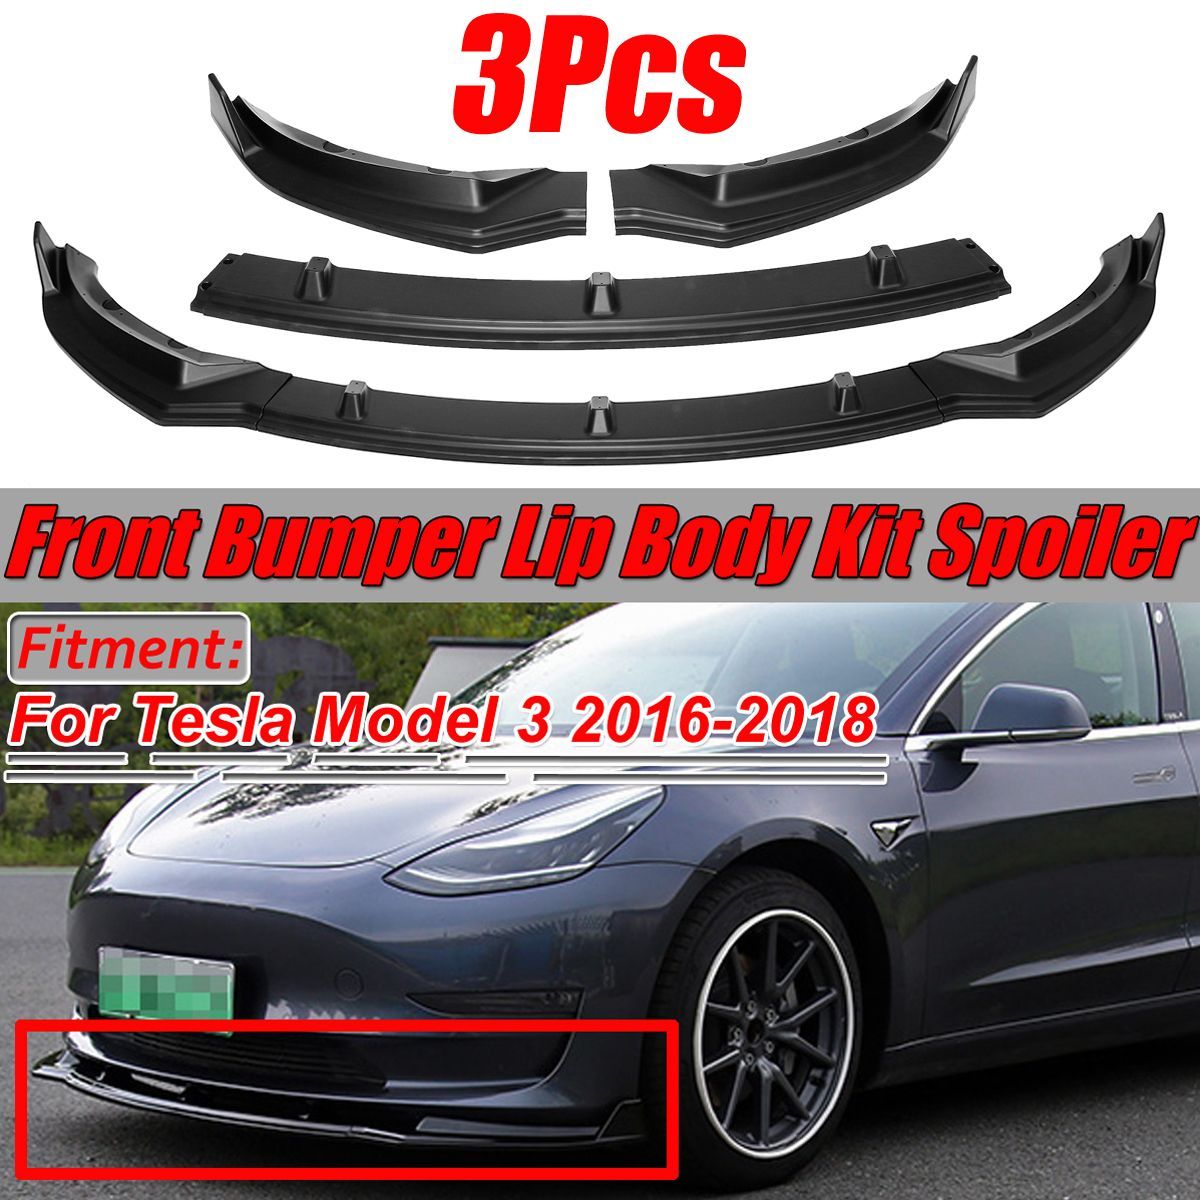 Matte-Black-Car-Front-Bumper-Lip-Body-Spoiler-Wing-Kit-3Pcs-For-Tesla-Model-3-2016-2019-1581978